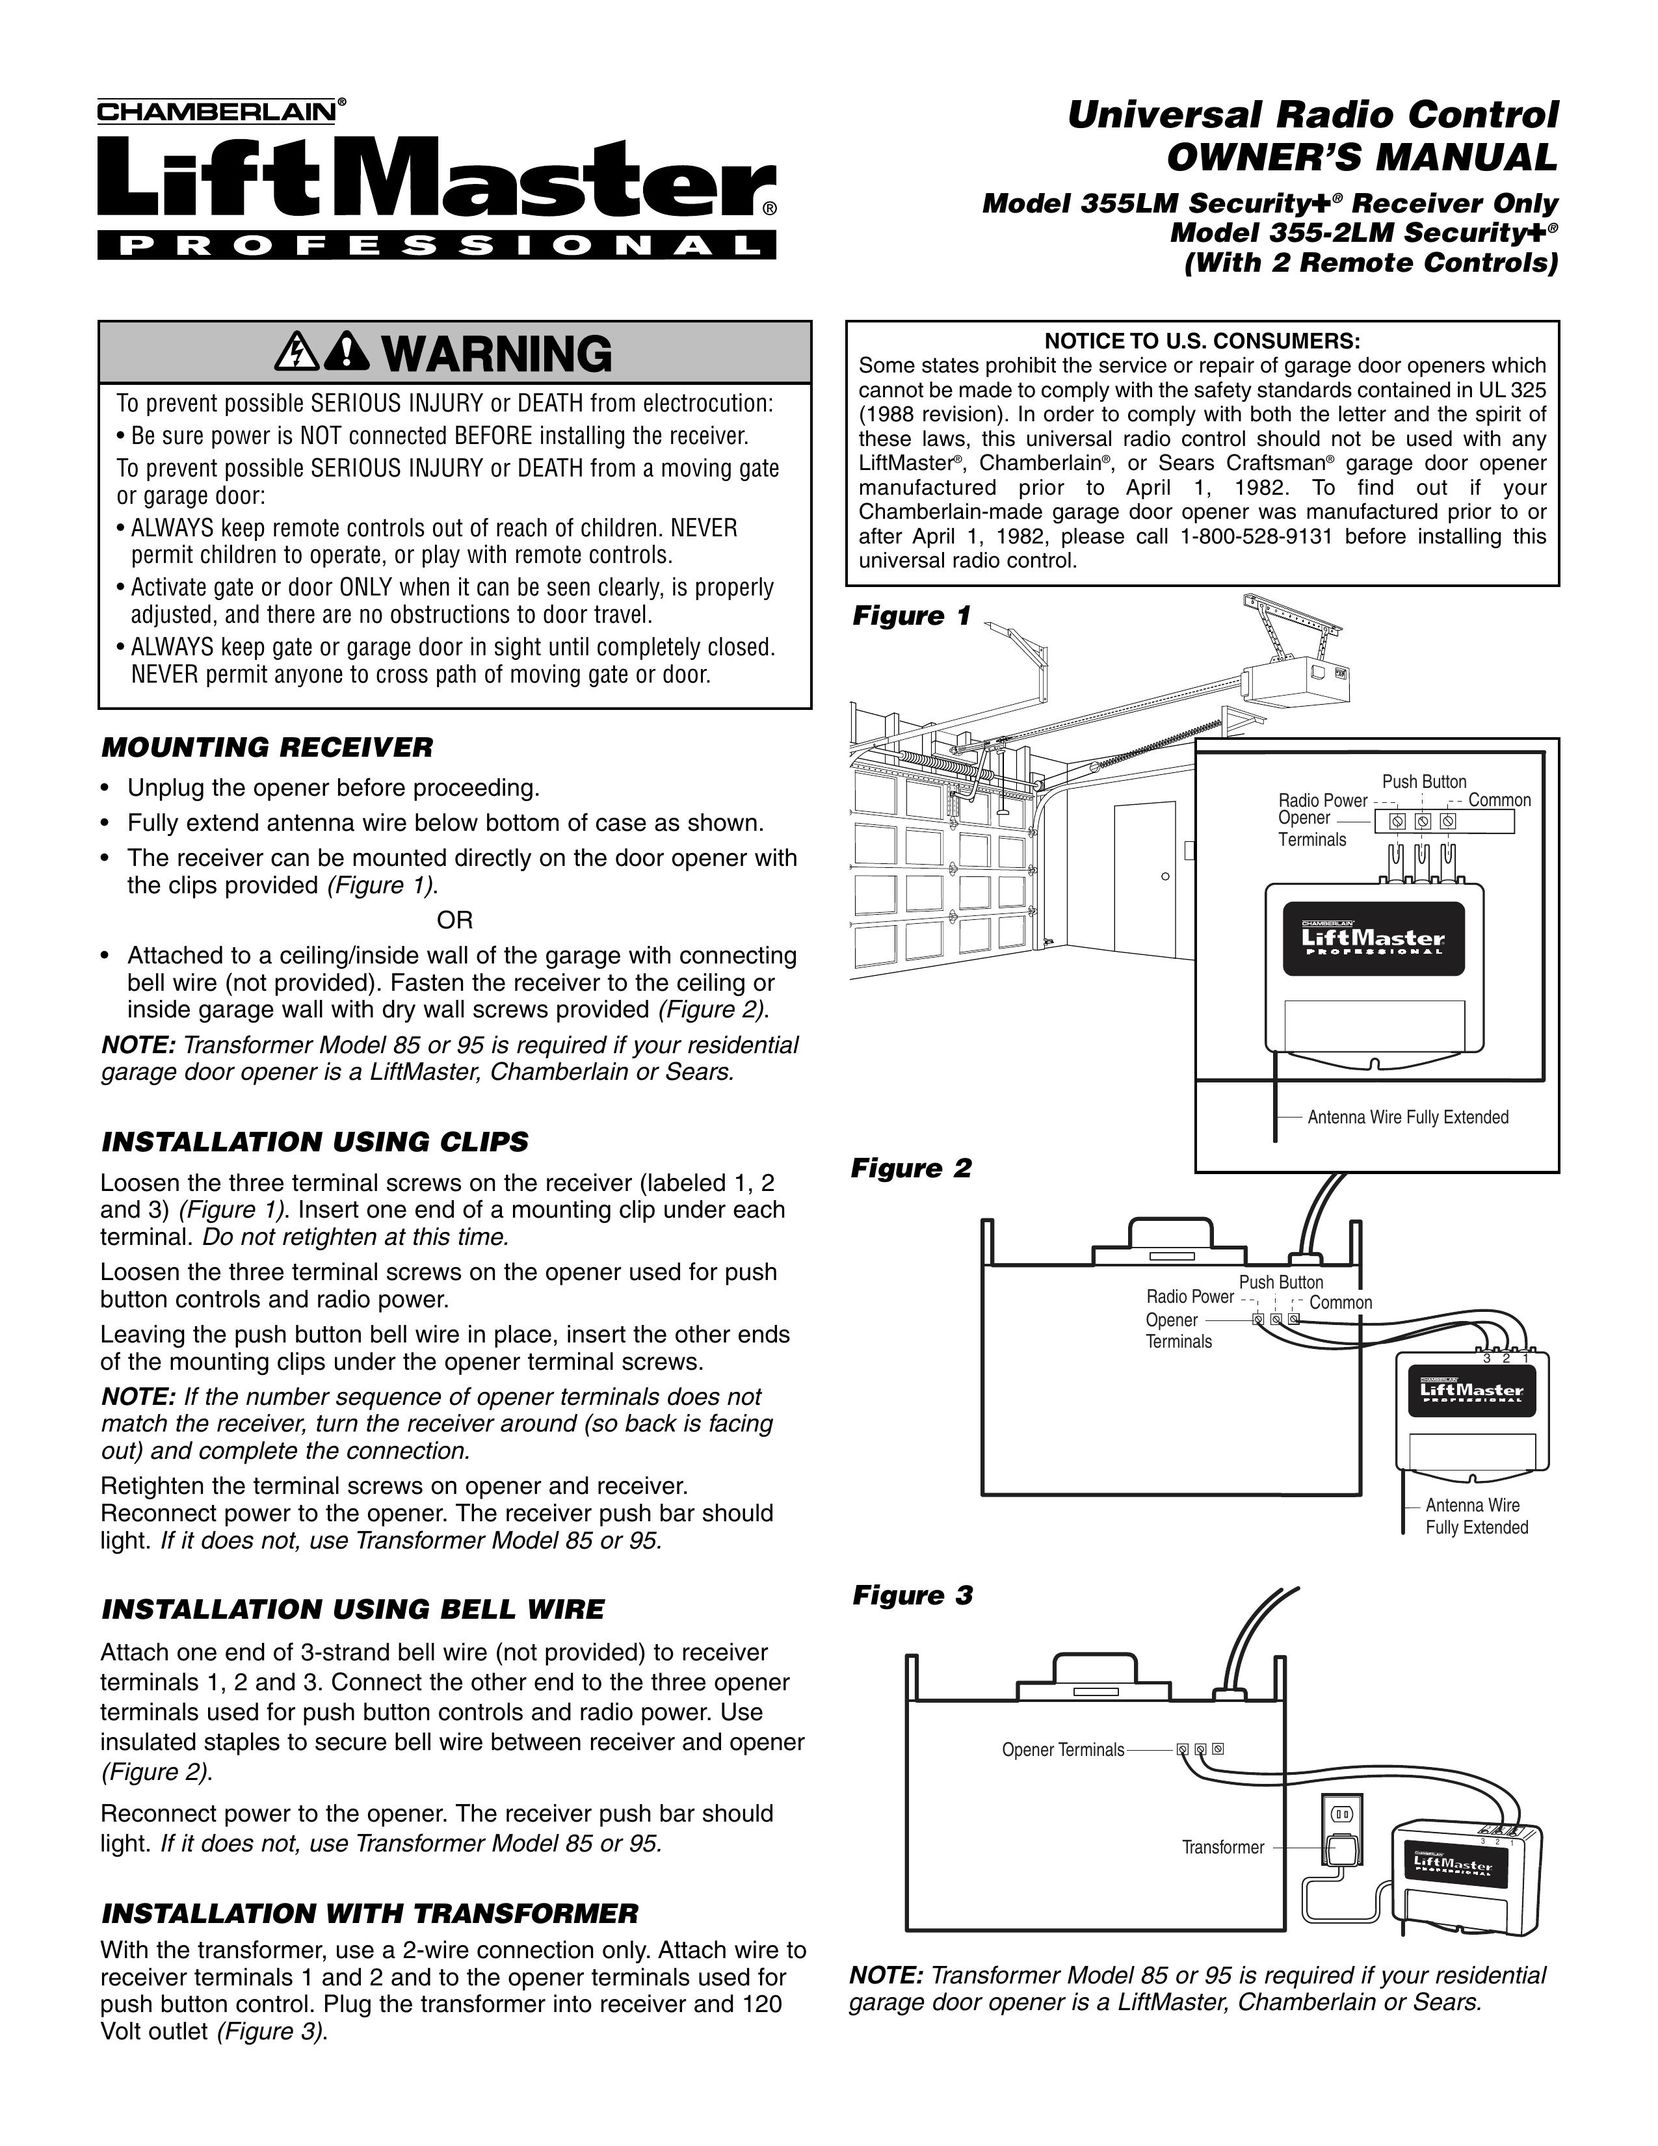 Chamberlain 355LM Clock User Manual